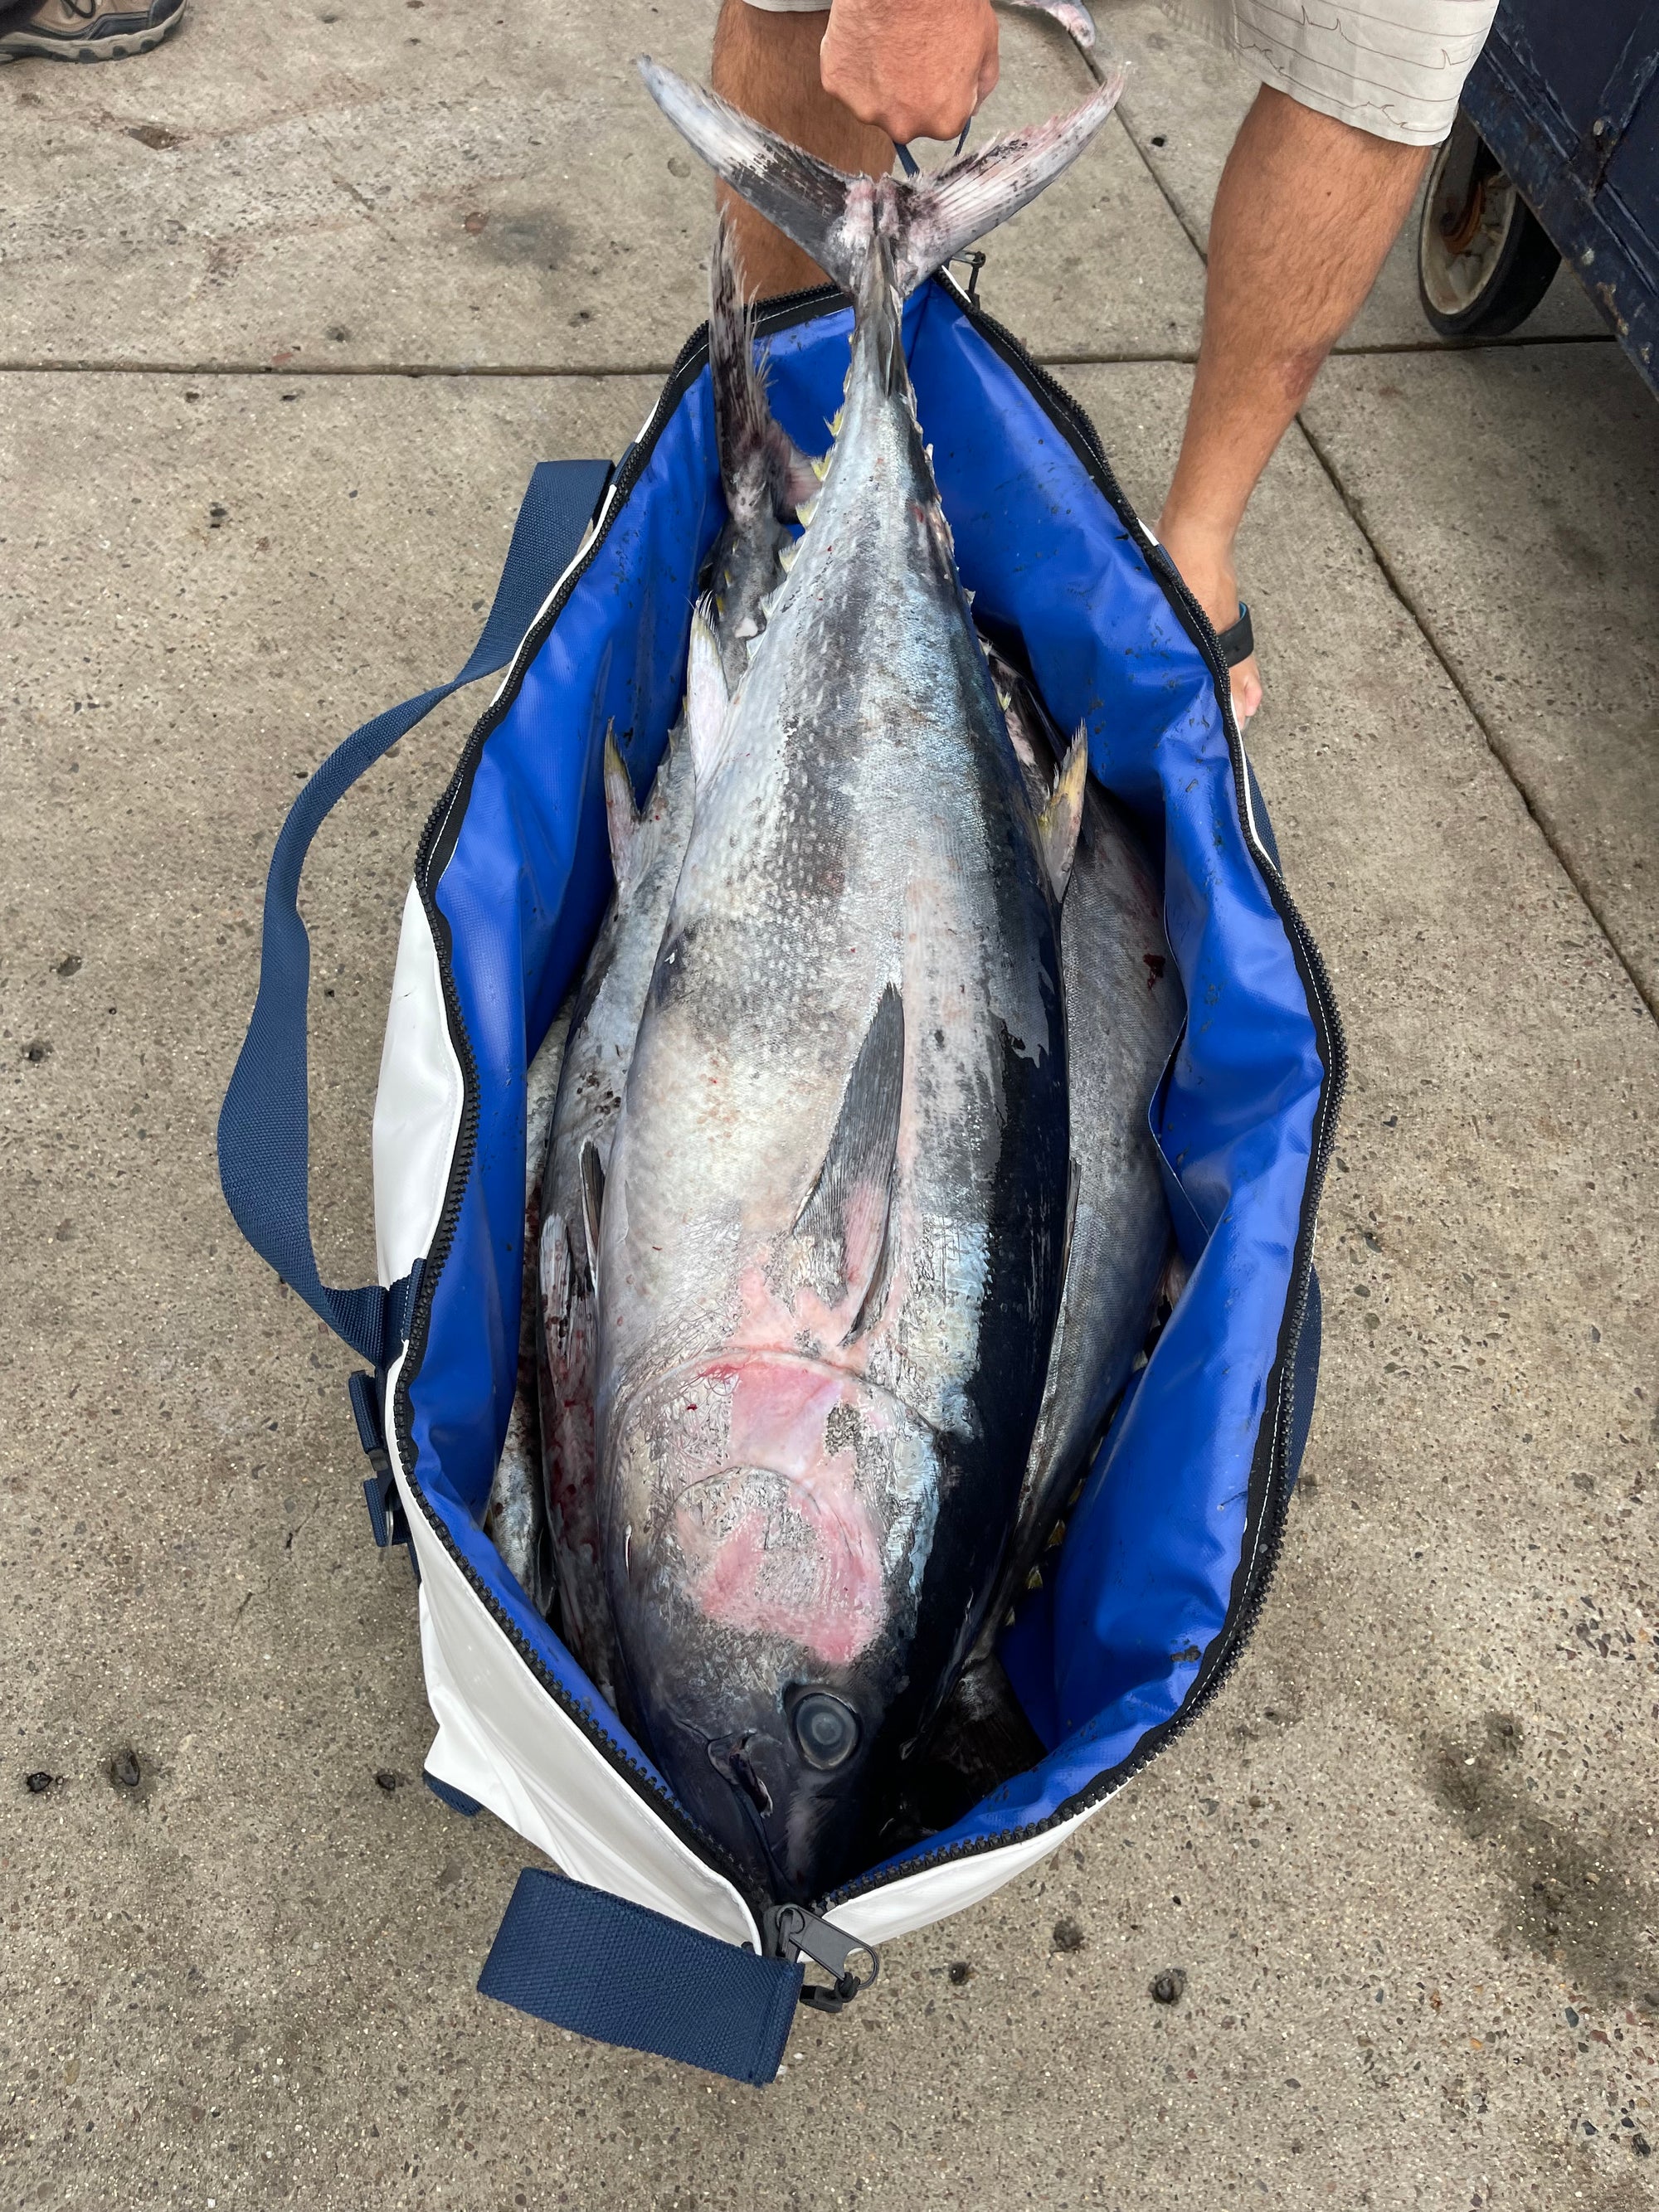 48" Fish Kill Bag - Deckhand - Blue Fin Tuna in the bag to take to processor (Long Range Trip)